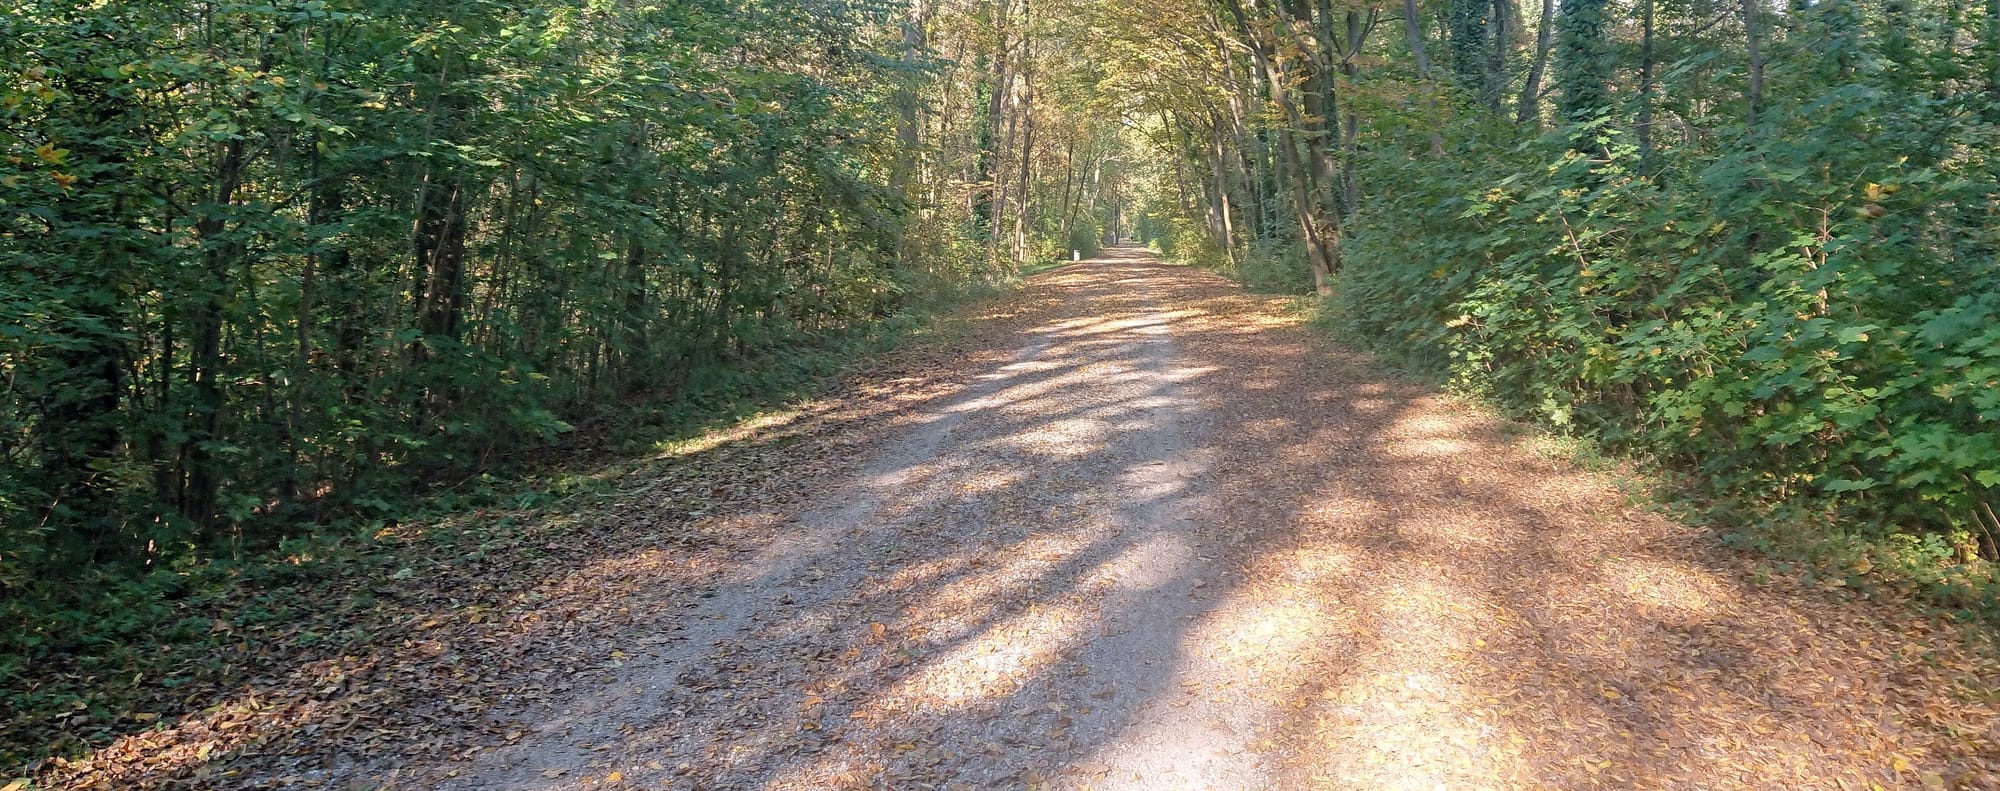 Road in woods shorter - Contact